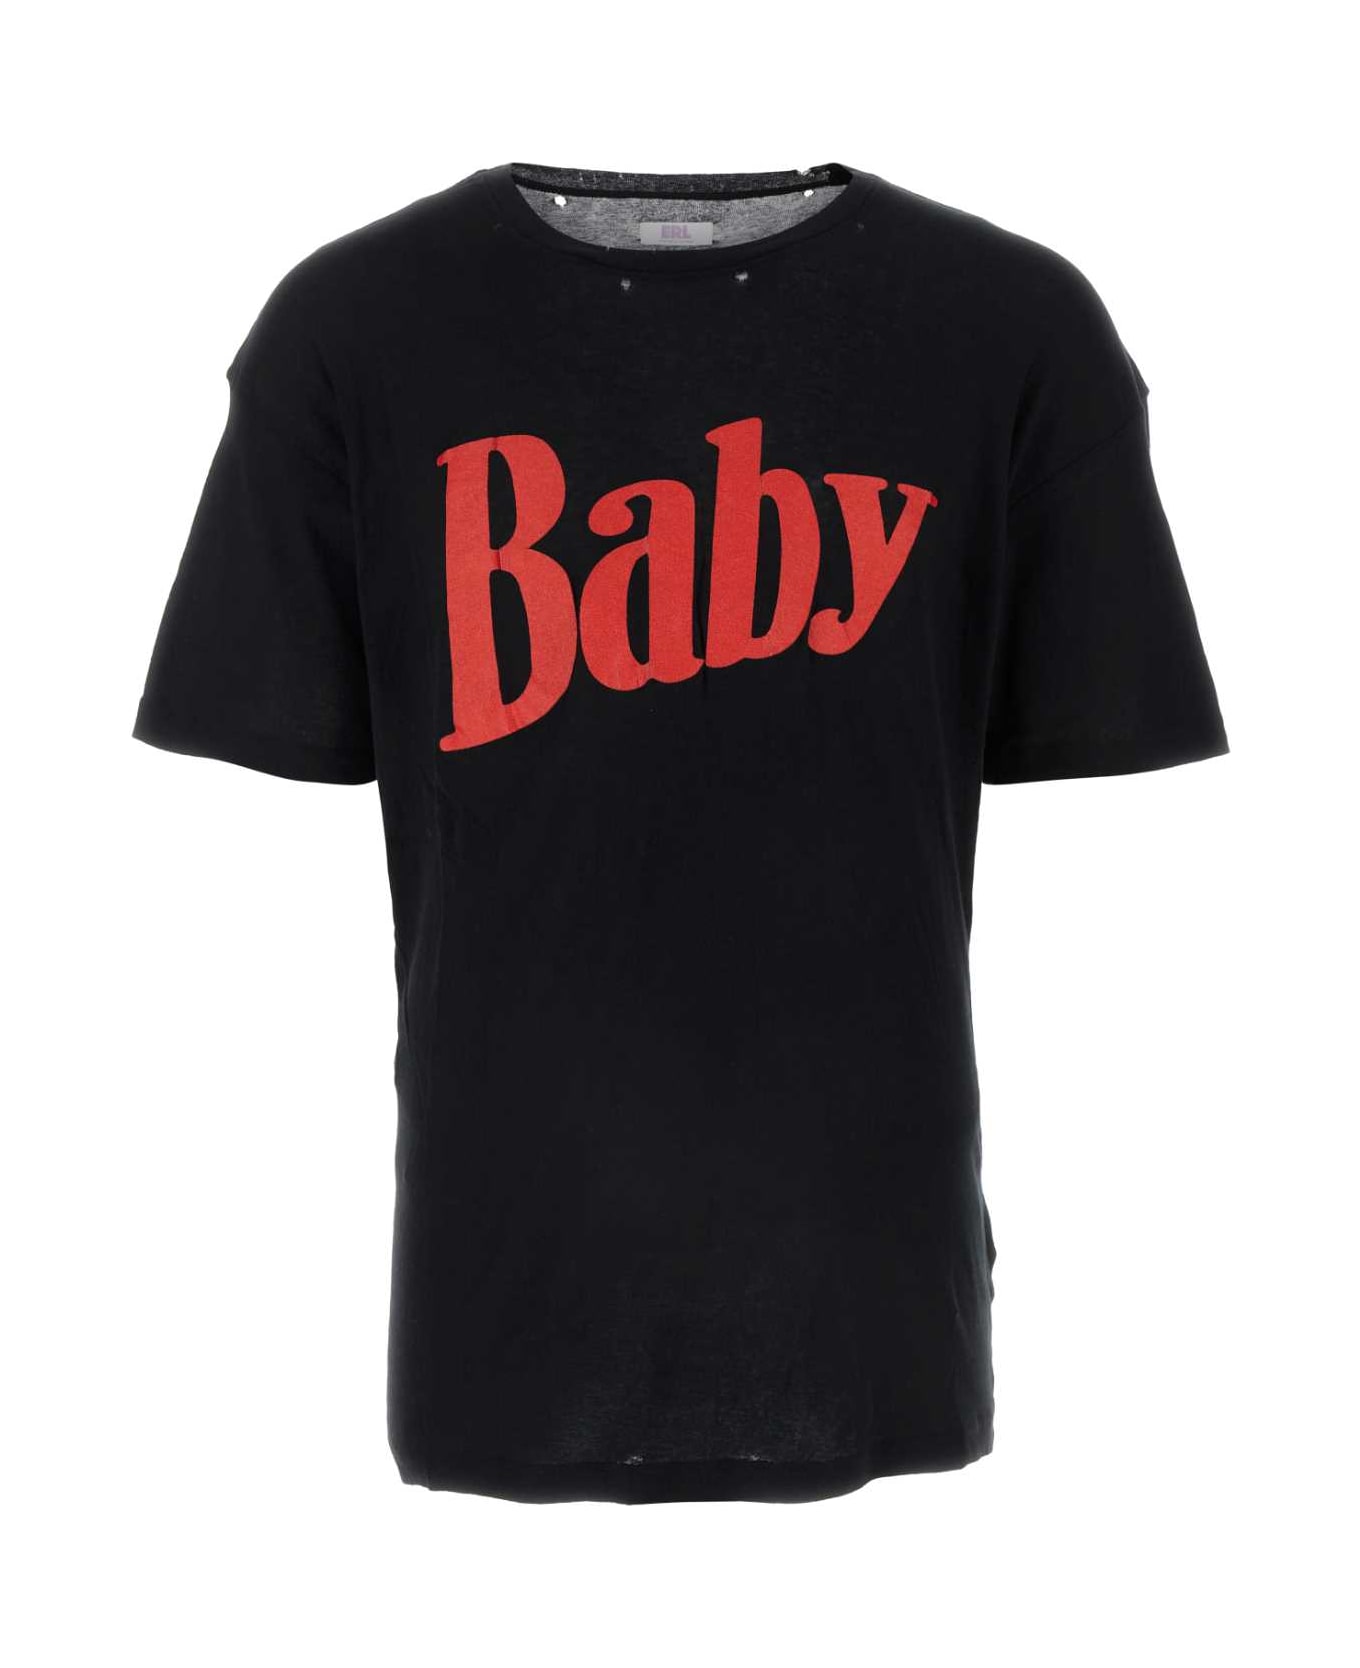 ERL Black Cotton T-shirt - FADEDBLACK Tシャツ